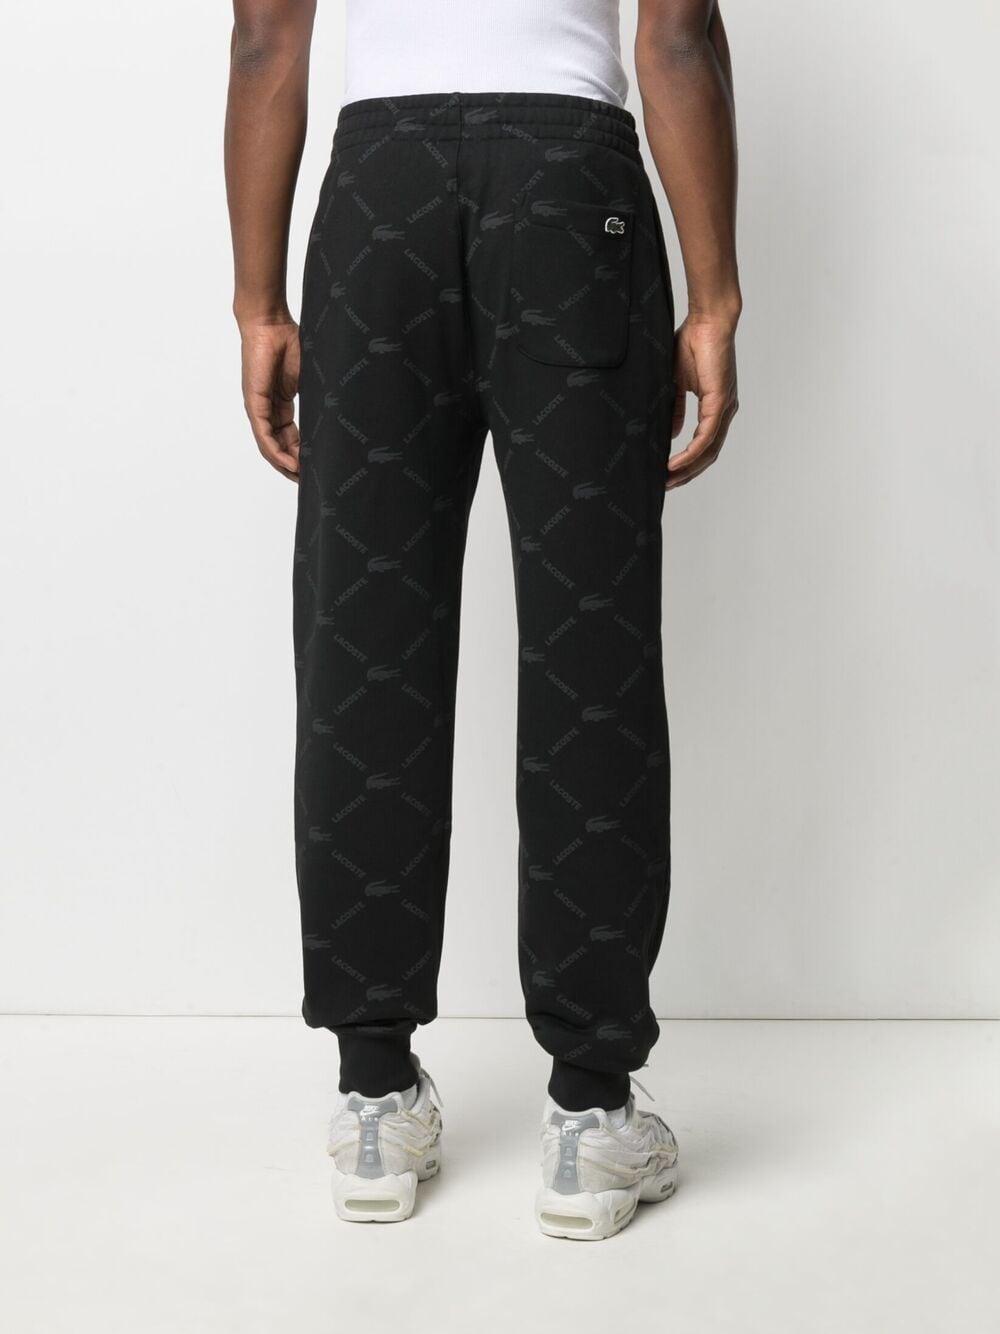 Lacoste Monogram-print Cotton Track Pants in Black for Men - Lyst